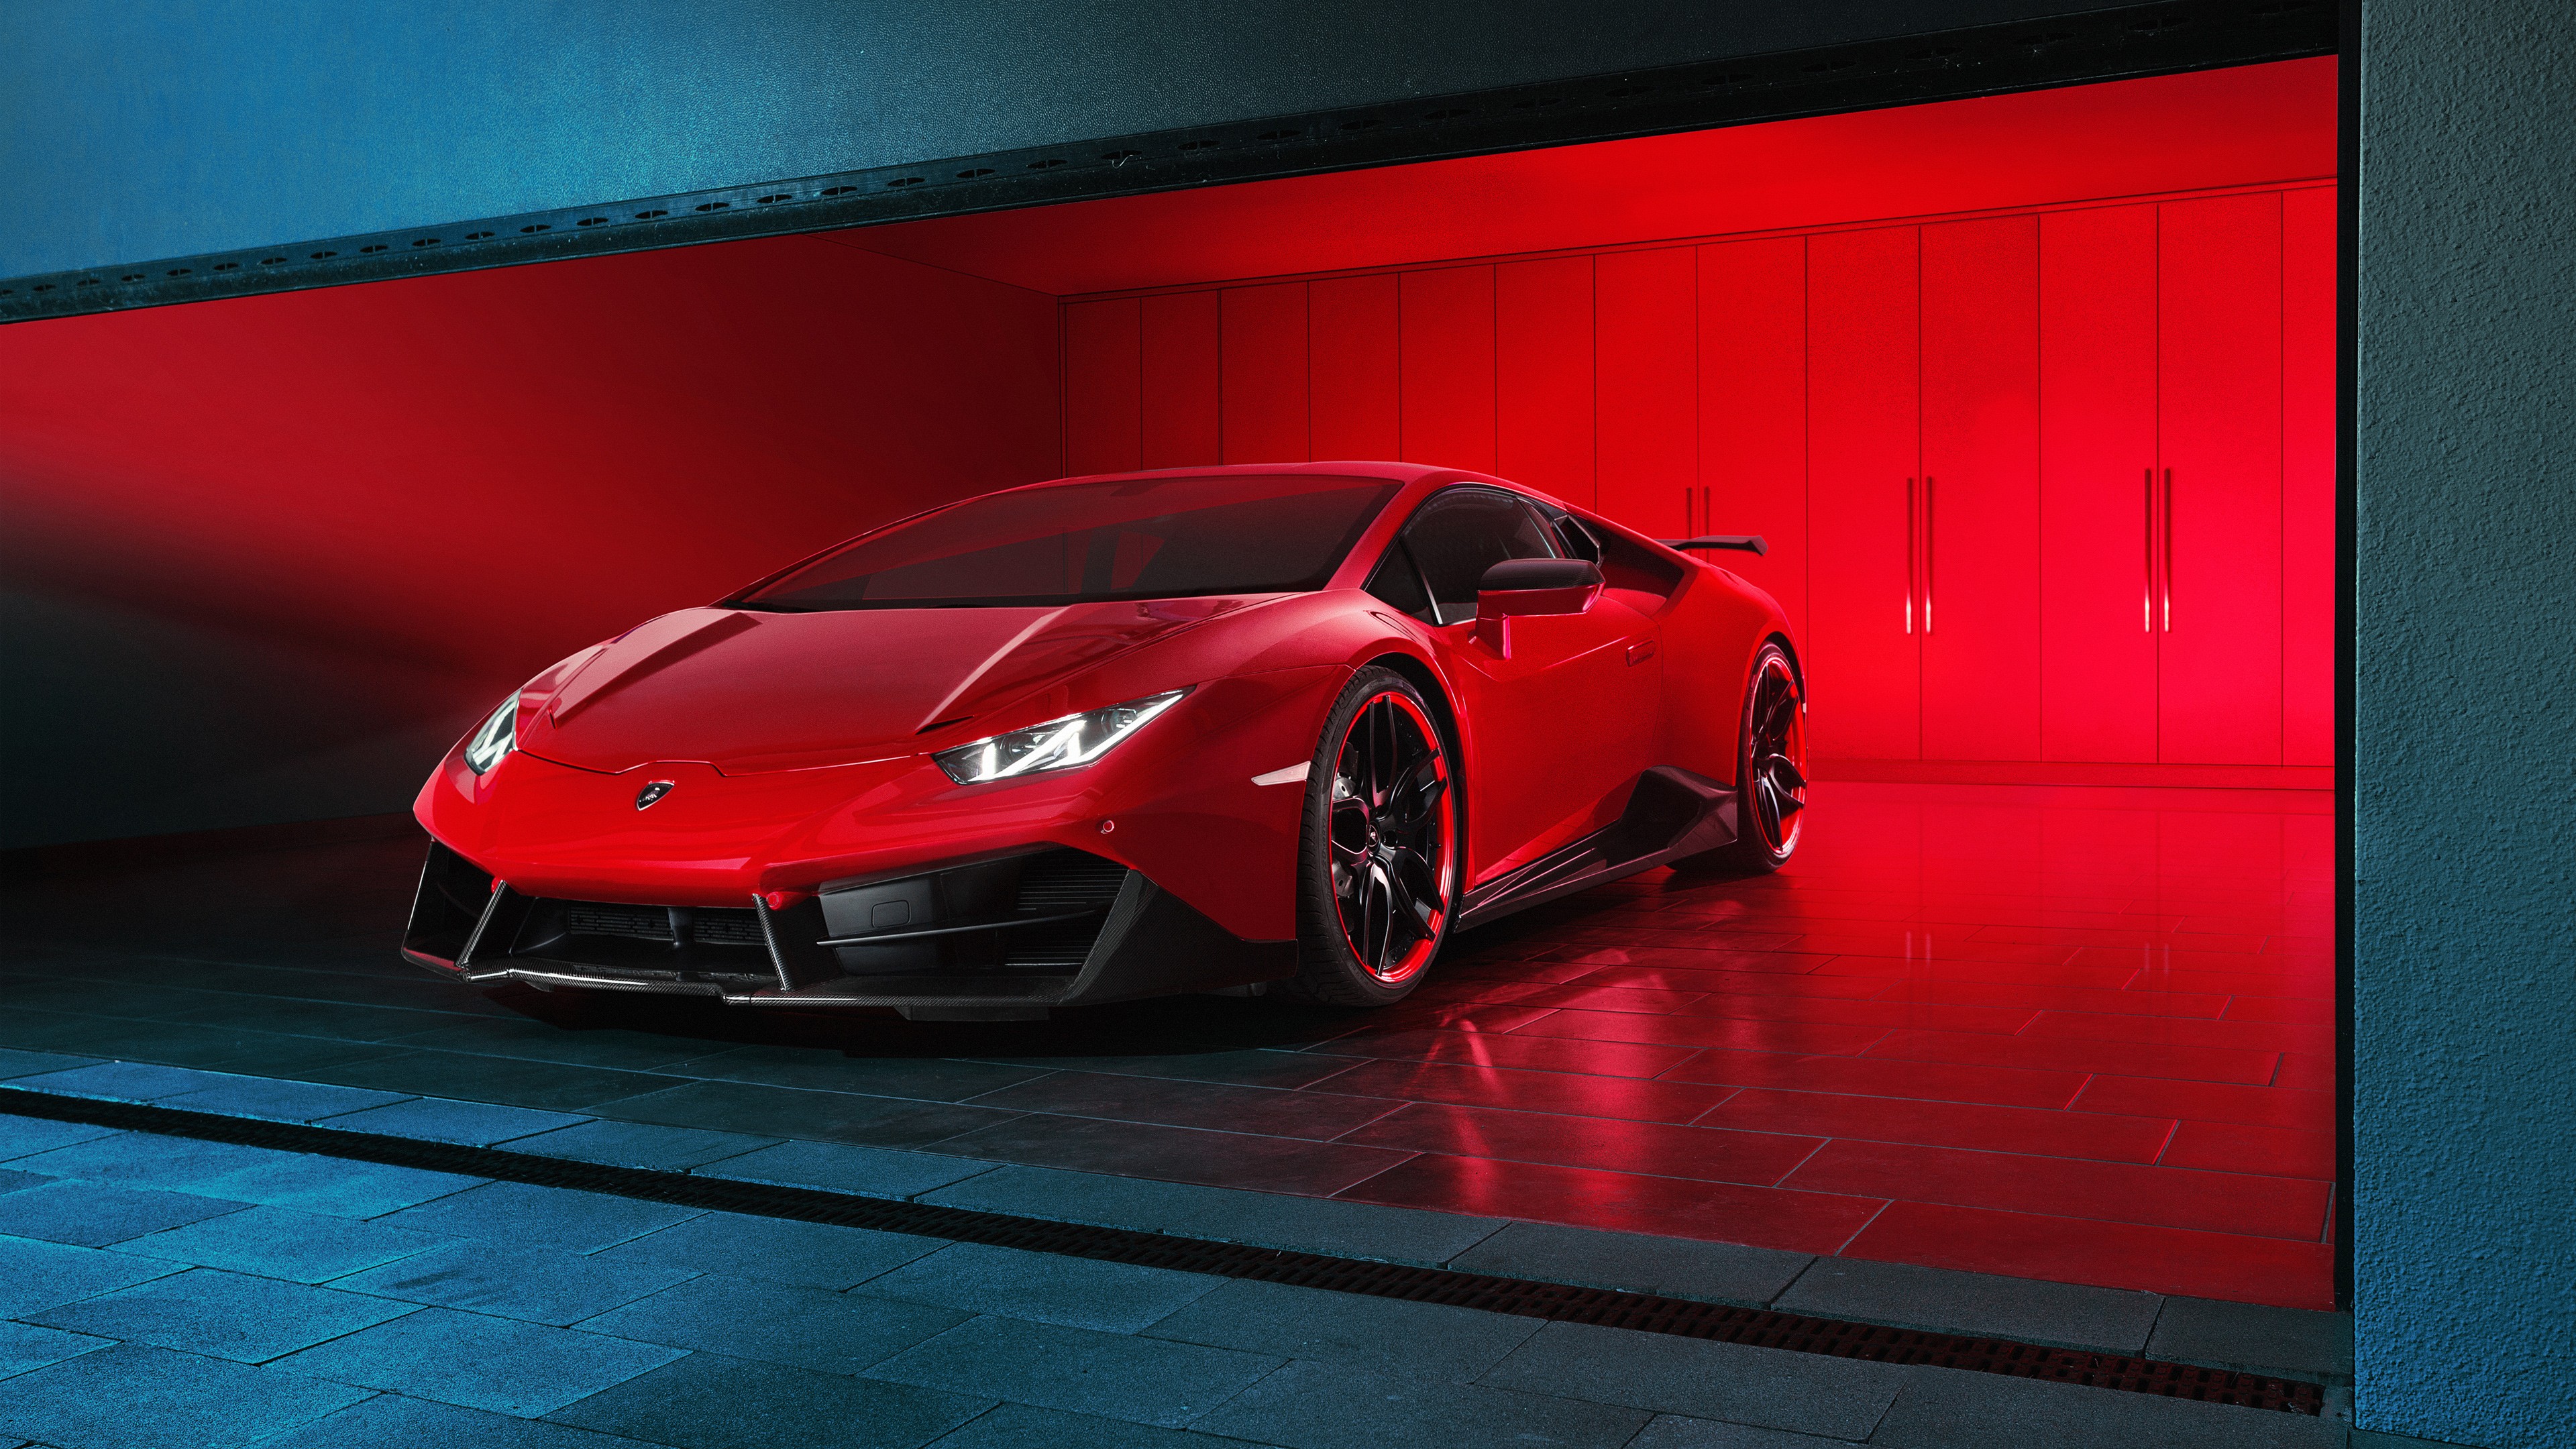 Red Lamborghini Widescreen HD Wallpaper Px